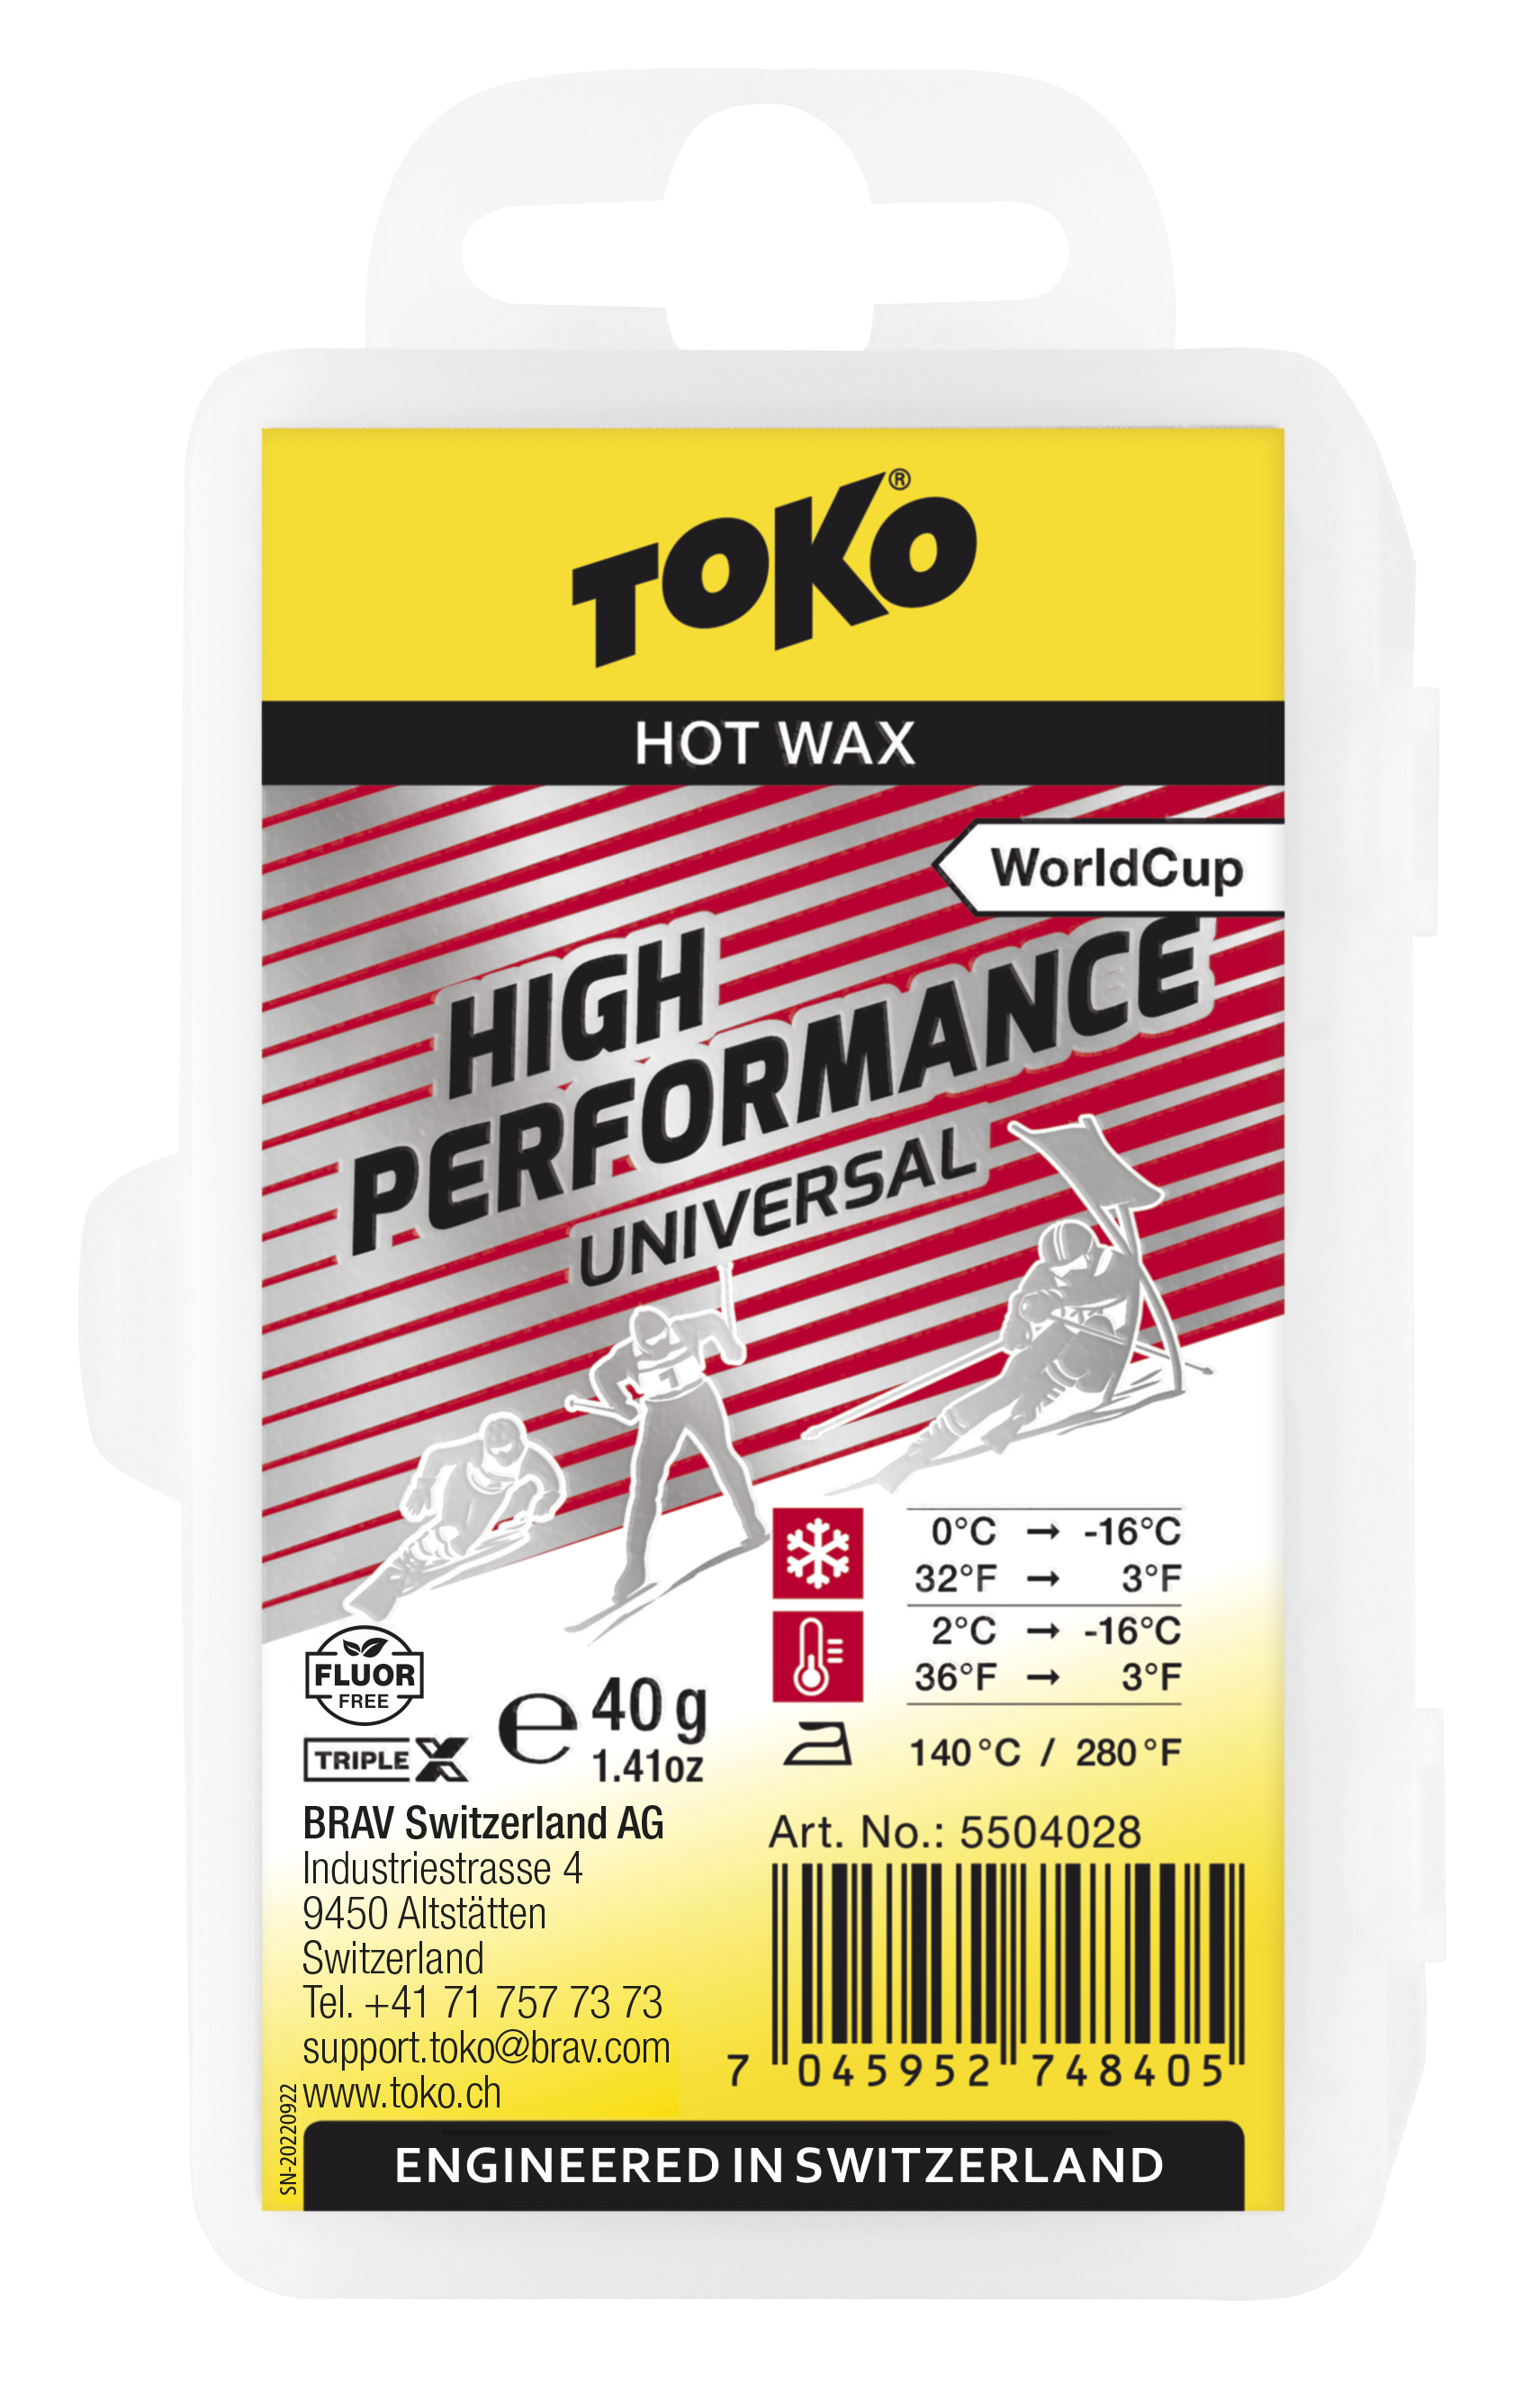 TOKO 	WC High Performance Universal 